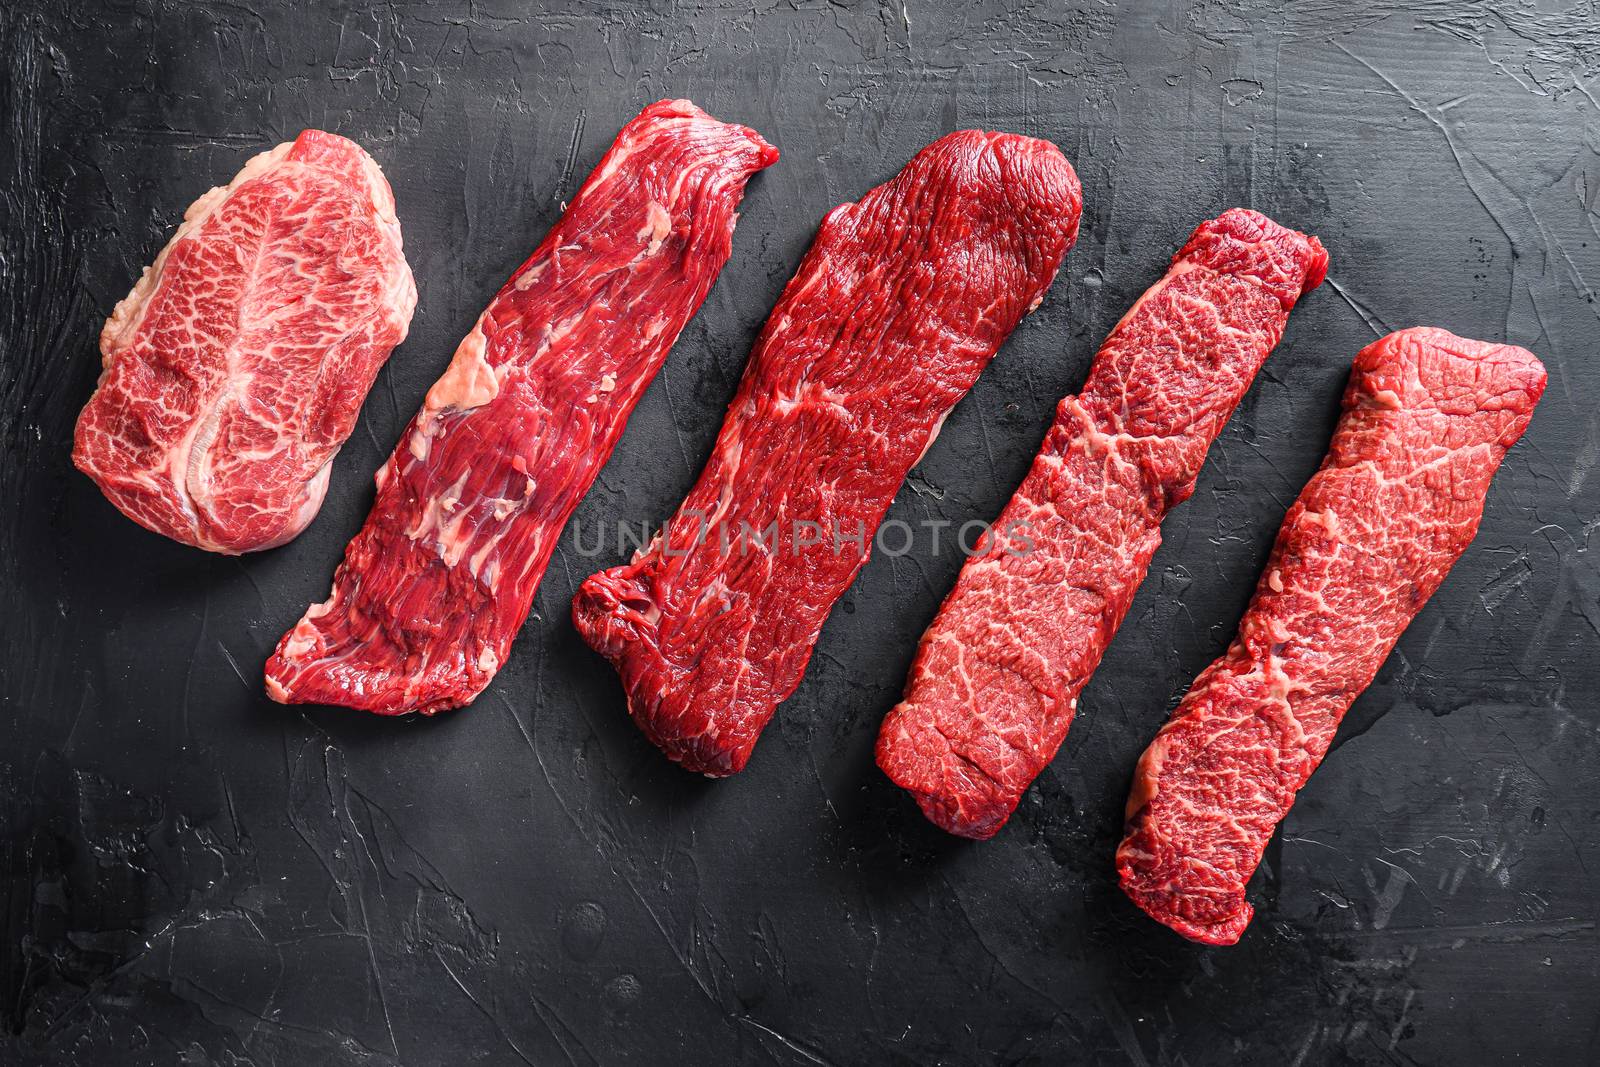 Raw, alternative beef steaks flap flank Steak, machete steak or skirt cut, Top blade or flat iron beef and tri tip, triangle roast with denver cut . Black stone background. Top view